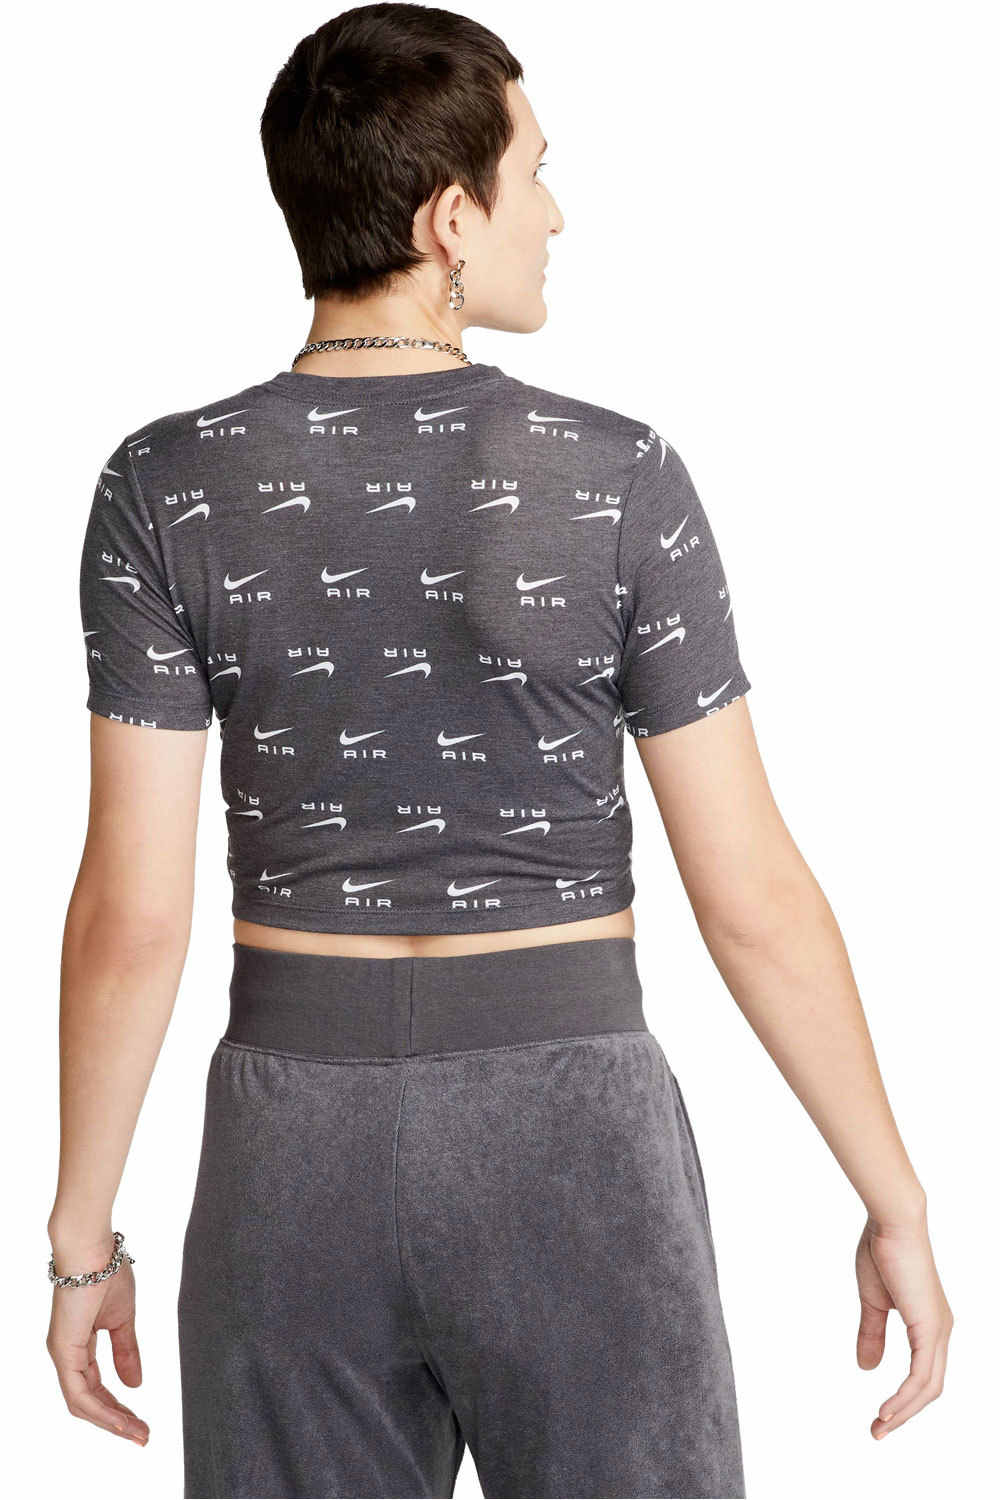 Nike camiseta manga corta mujer W NSW TEE AIR SLIM CRP vista trasera